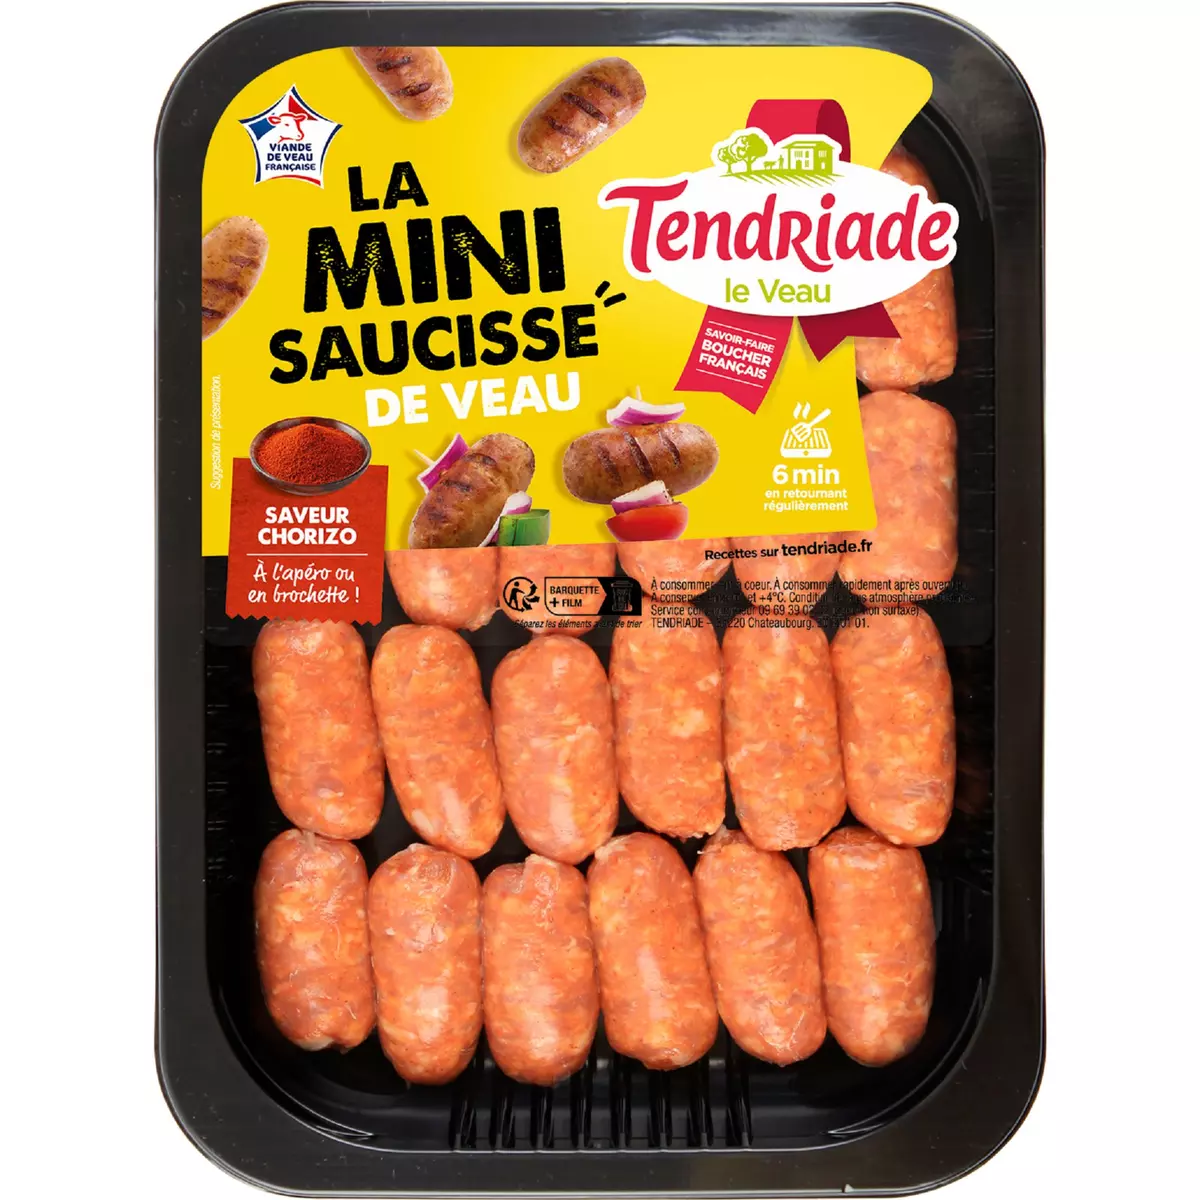 TENDRIADE Mini saucisse de veau saveur chorizo 24x10g